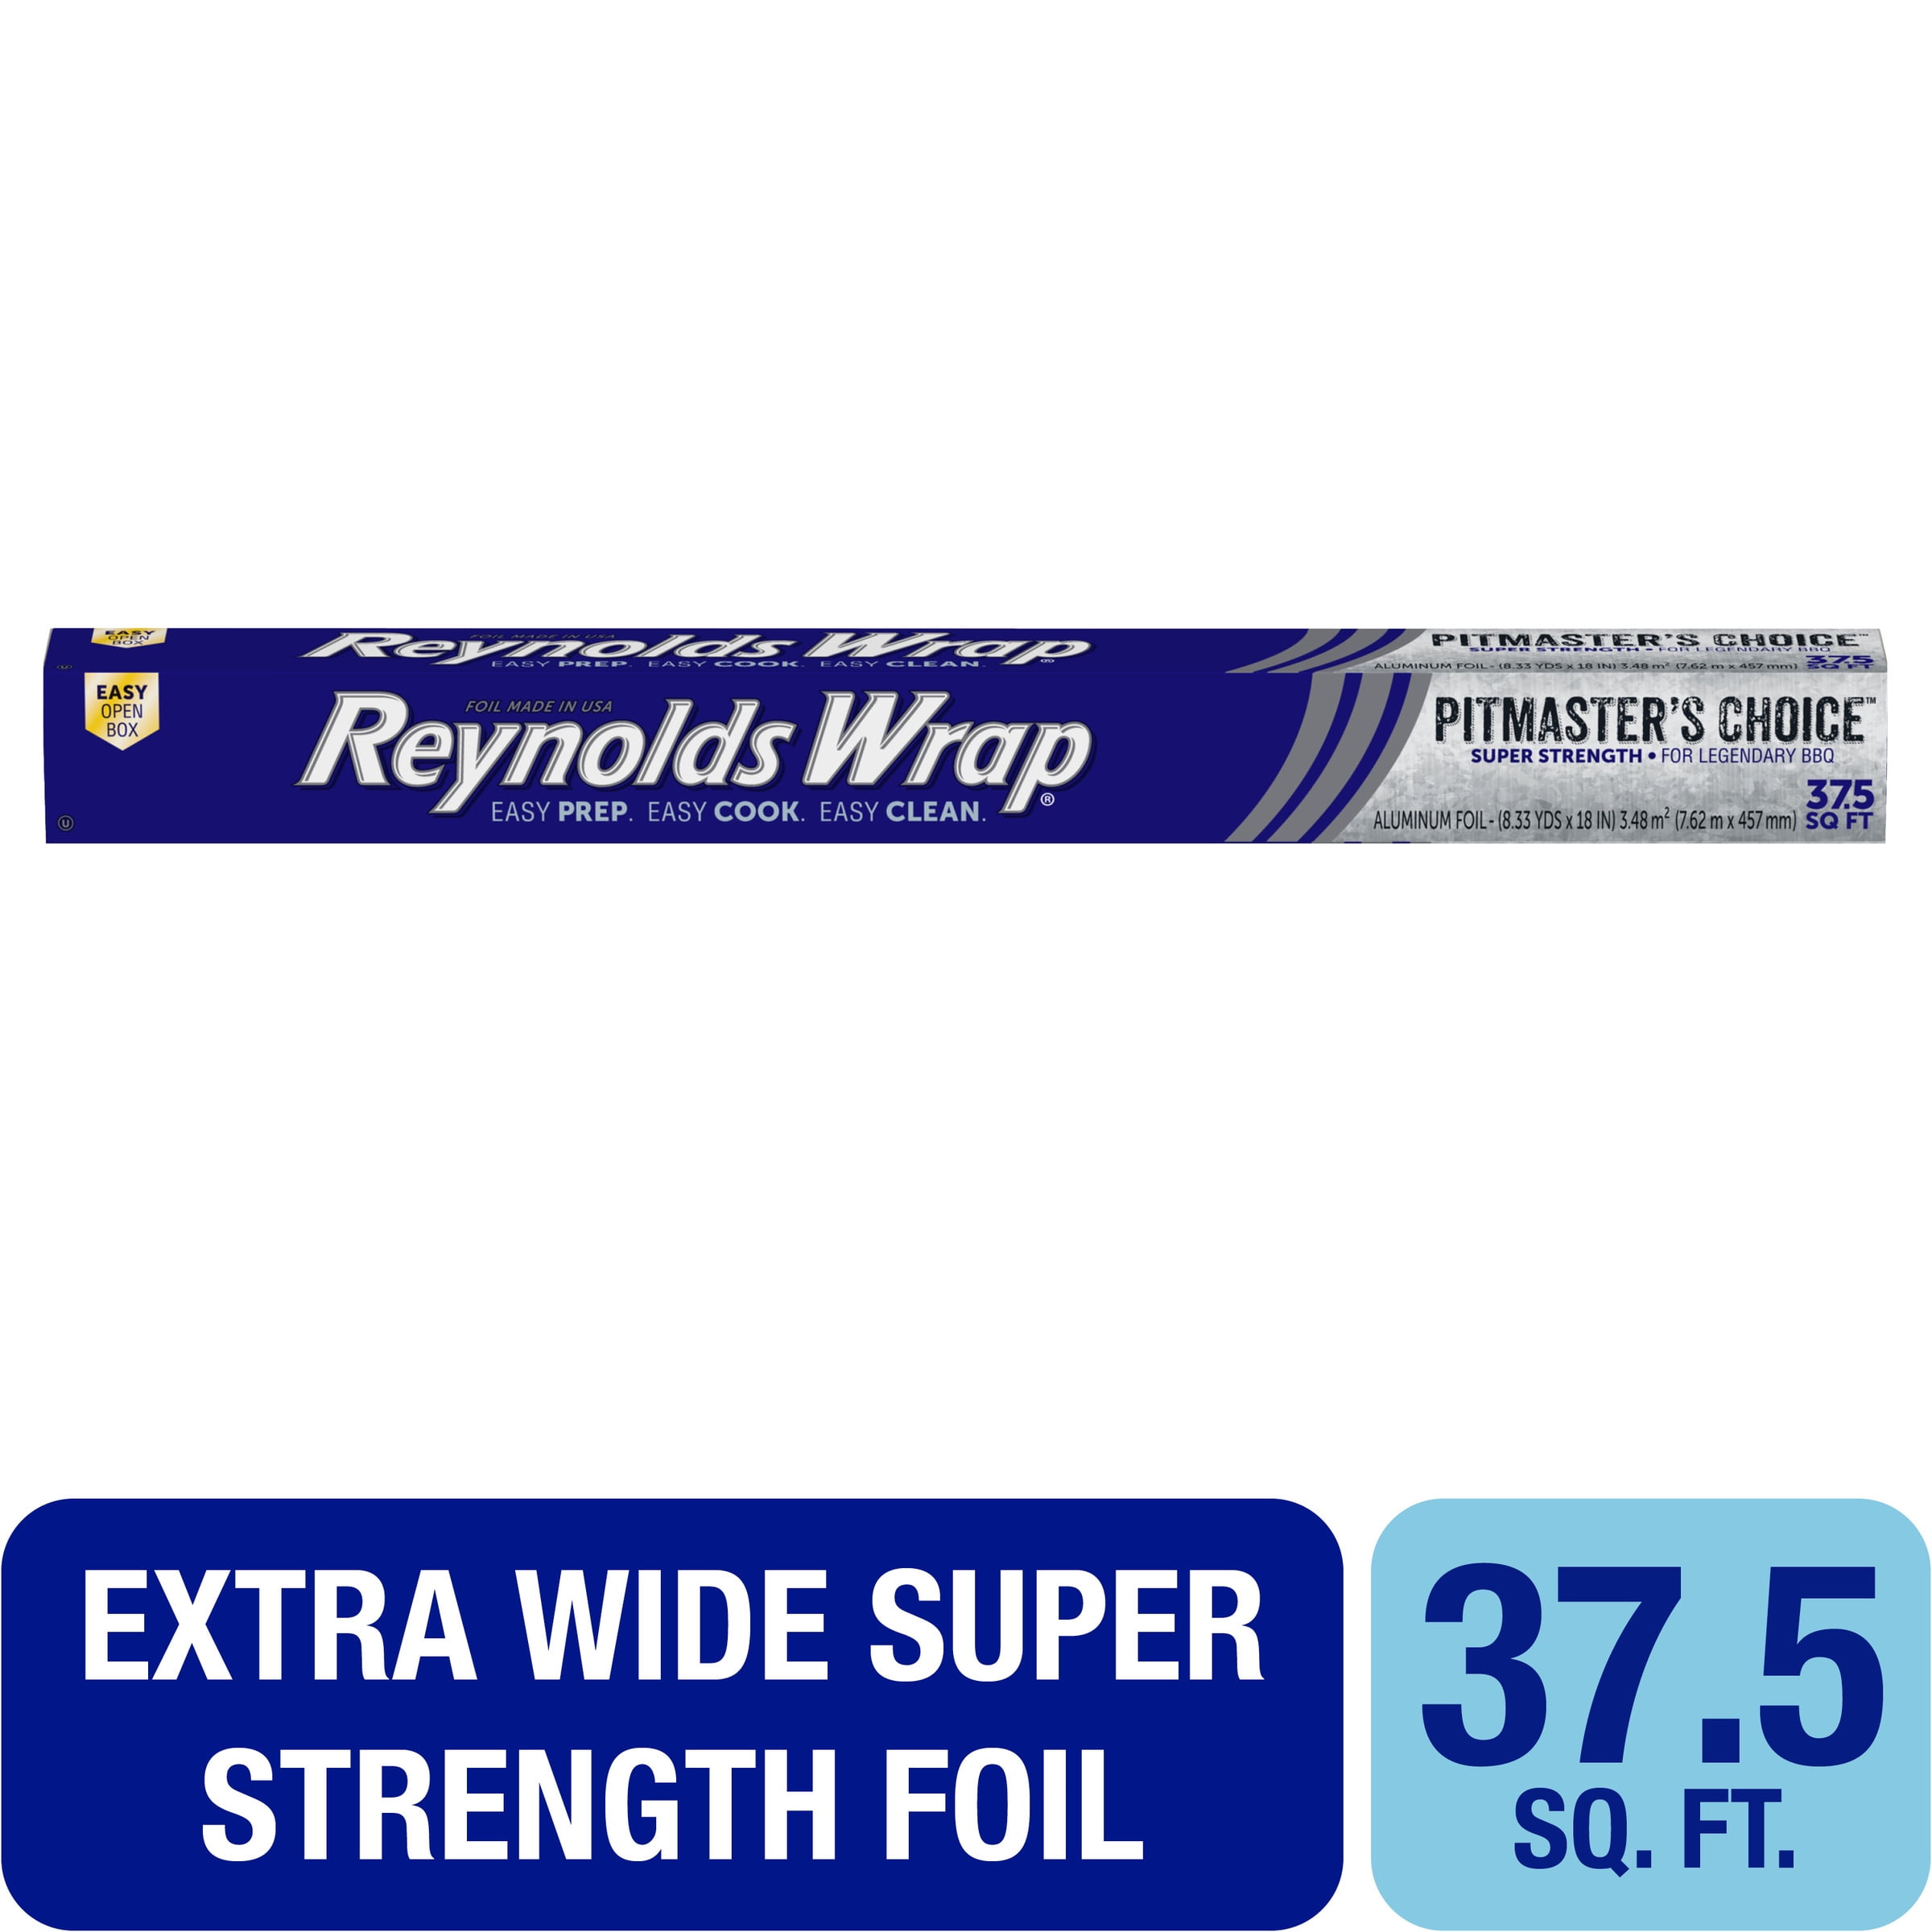 Reynolds Wrap Pitmaster's Choice Aluminum Foil, 18 inch, 37.5